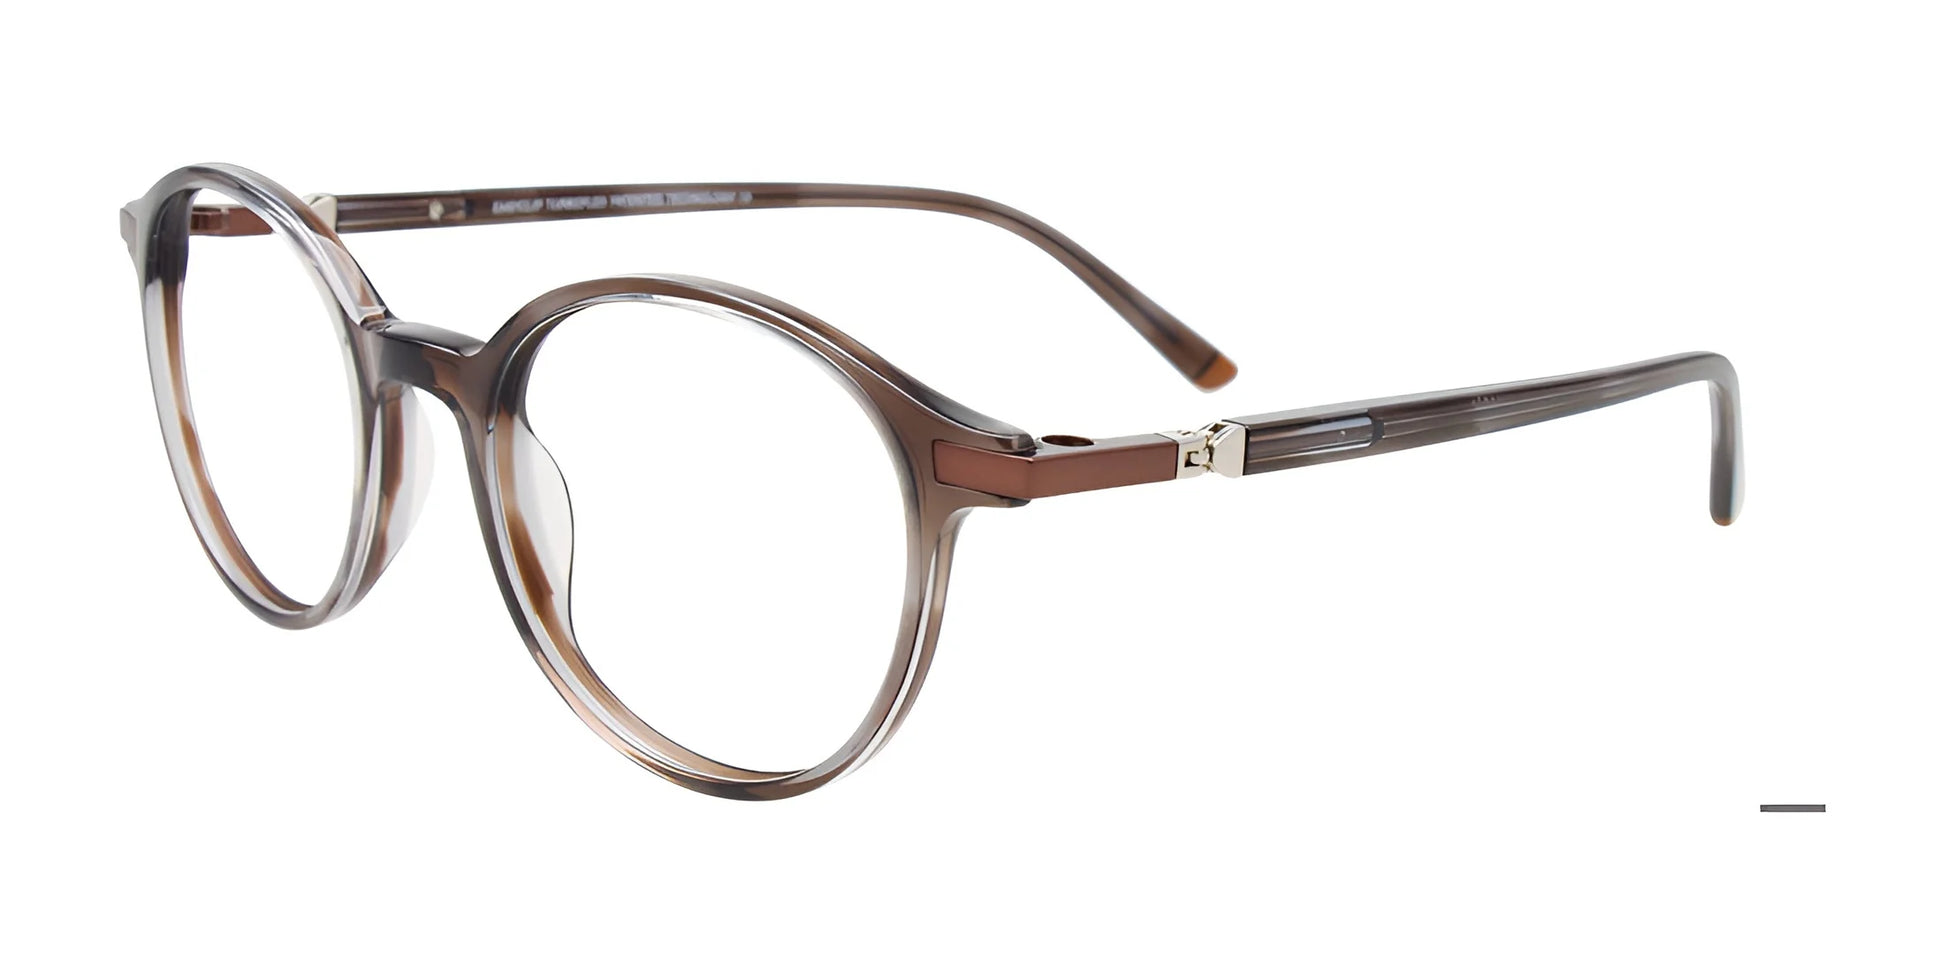 EasyClip EC647 Eyeglasses with Clip-on Sunglasses Greysh Brown & Brown